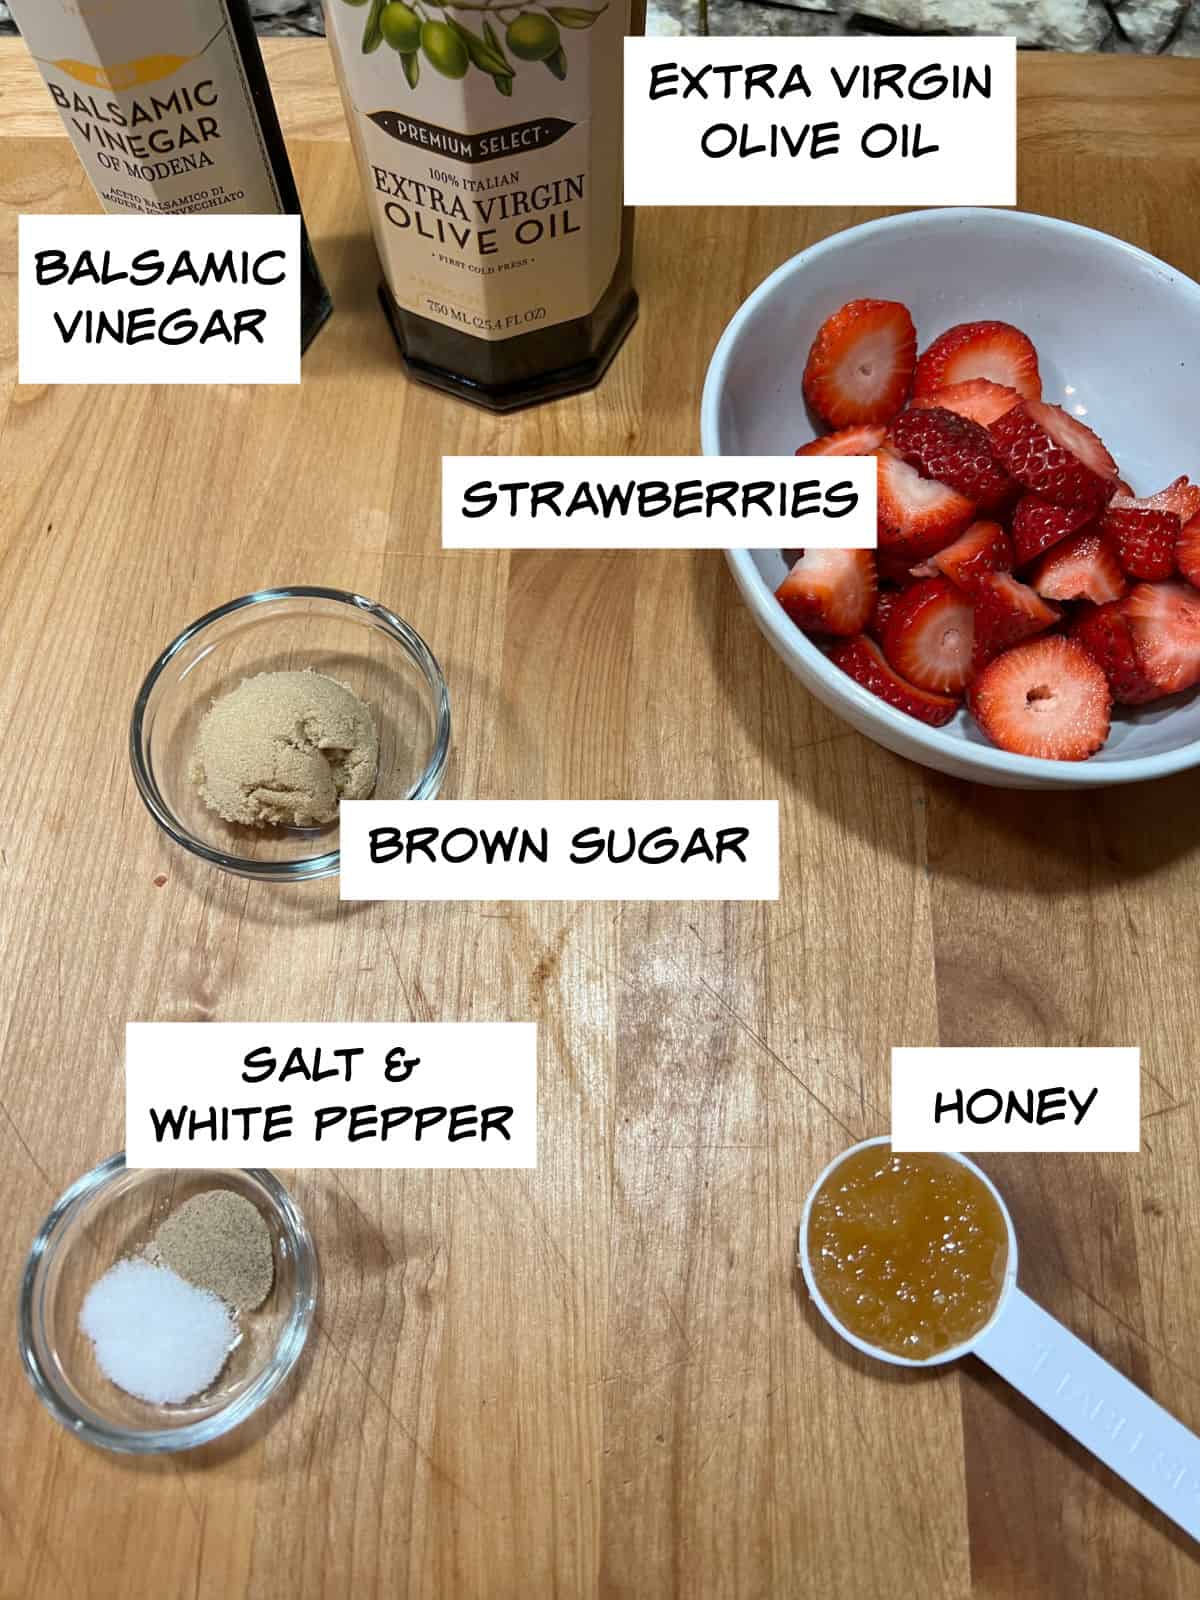 Ingredients: balsamic vinegar, extra-virgin olive oil, strawberries, brown sugar, honey, salt, and white pepper.